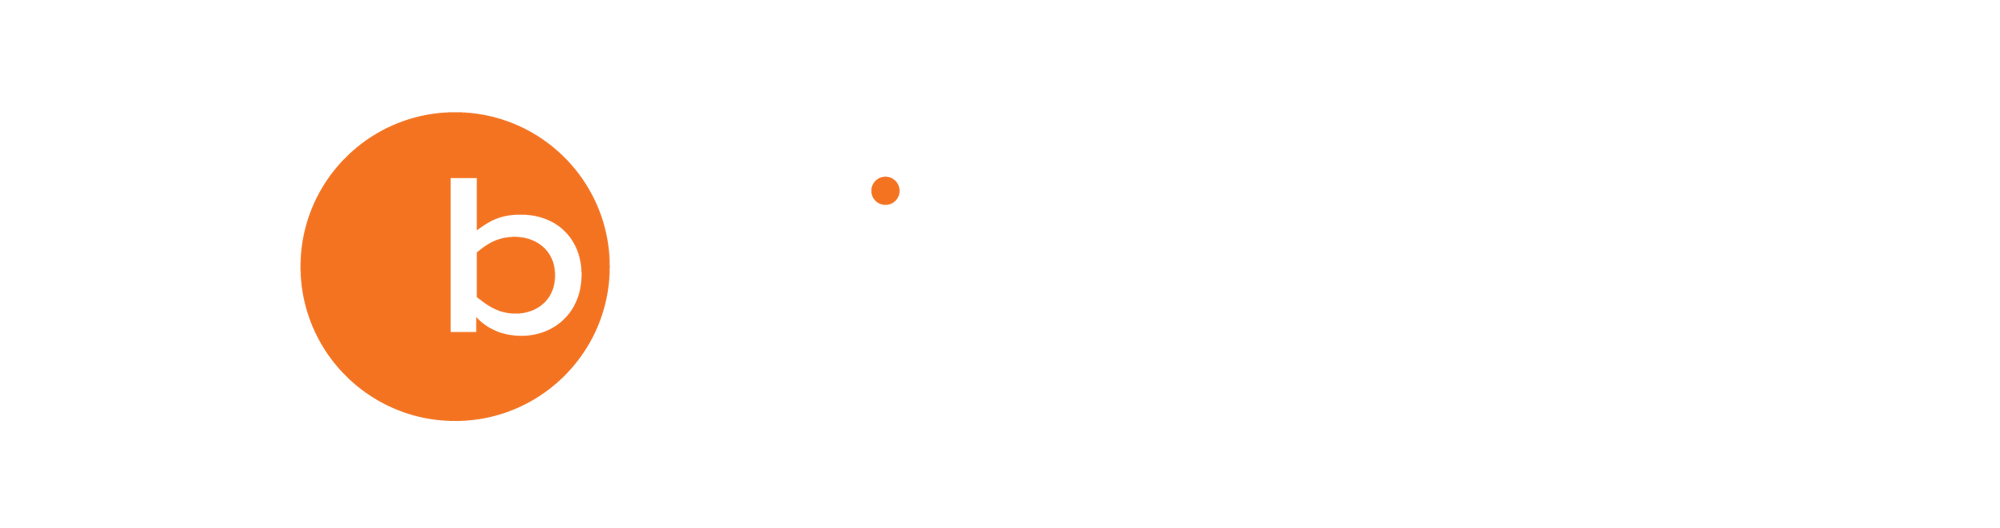 BallisagerLogo_neg_HR_partner_transparent